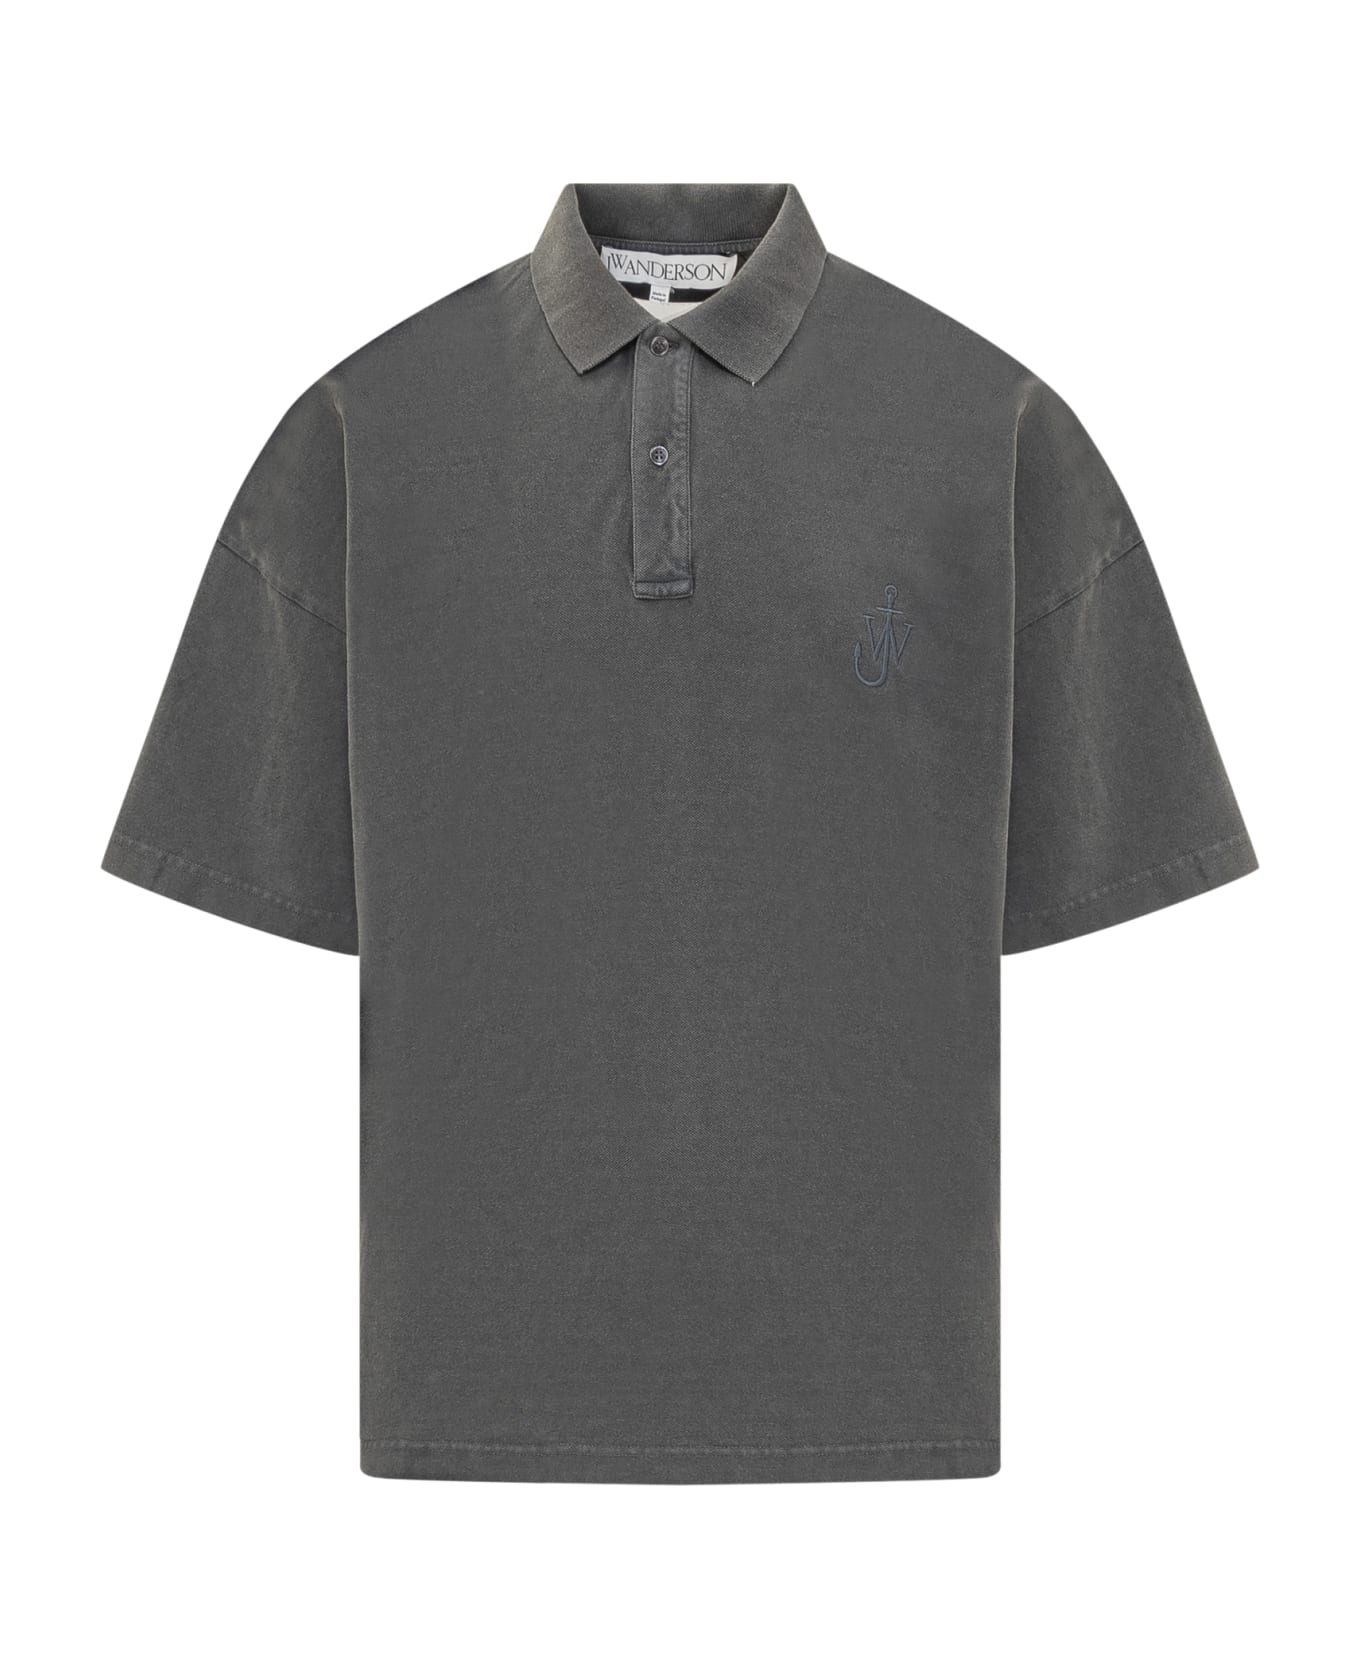 J.W. Anderson Jwa Anchor Polo Shirt - CHARCOAL ポロシャツ